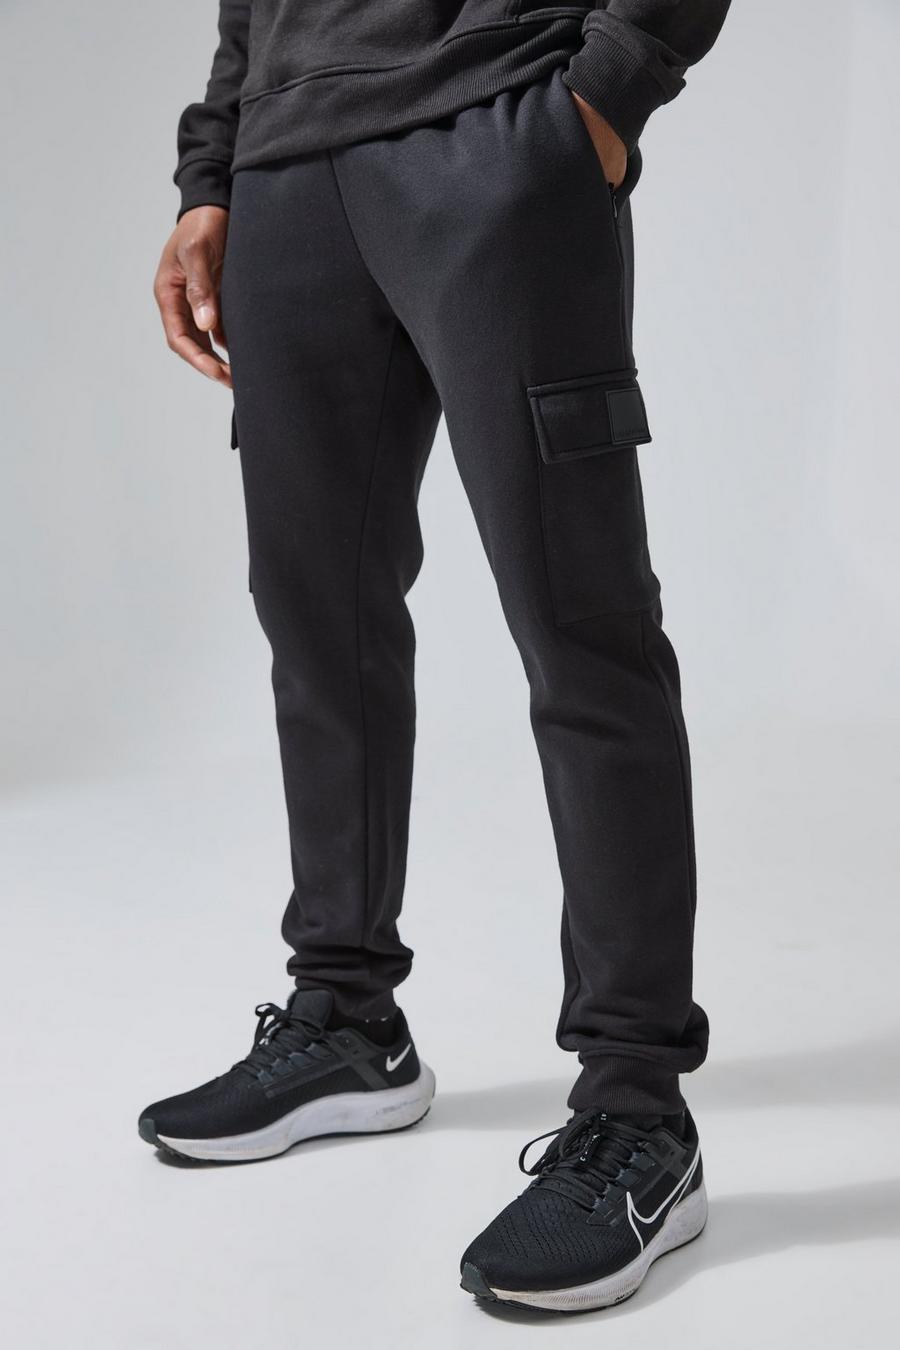 Pantaloni tuta Man Active Gym stile Cargo, Black image number 1